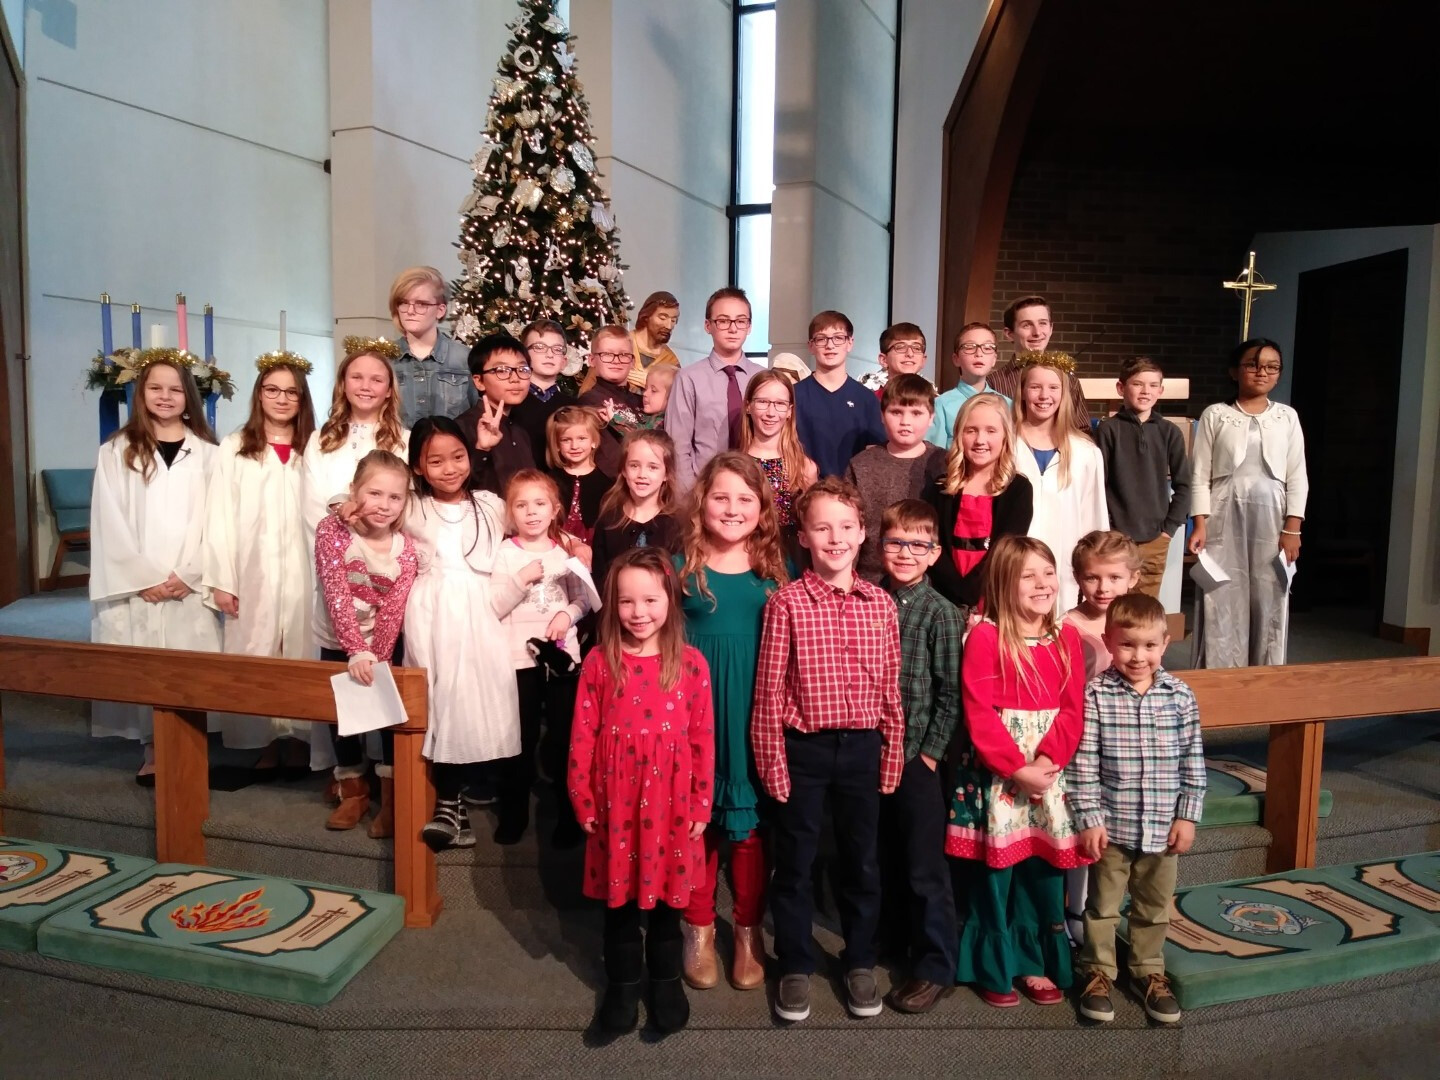 Sunday School Christmas Play — "Every Knee Shall Bow"